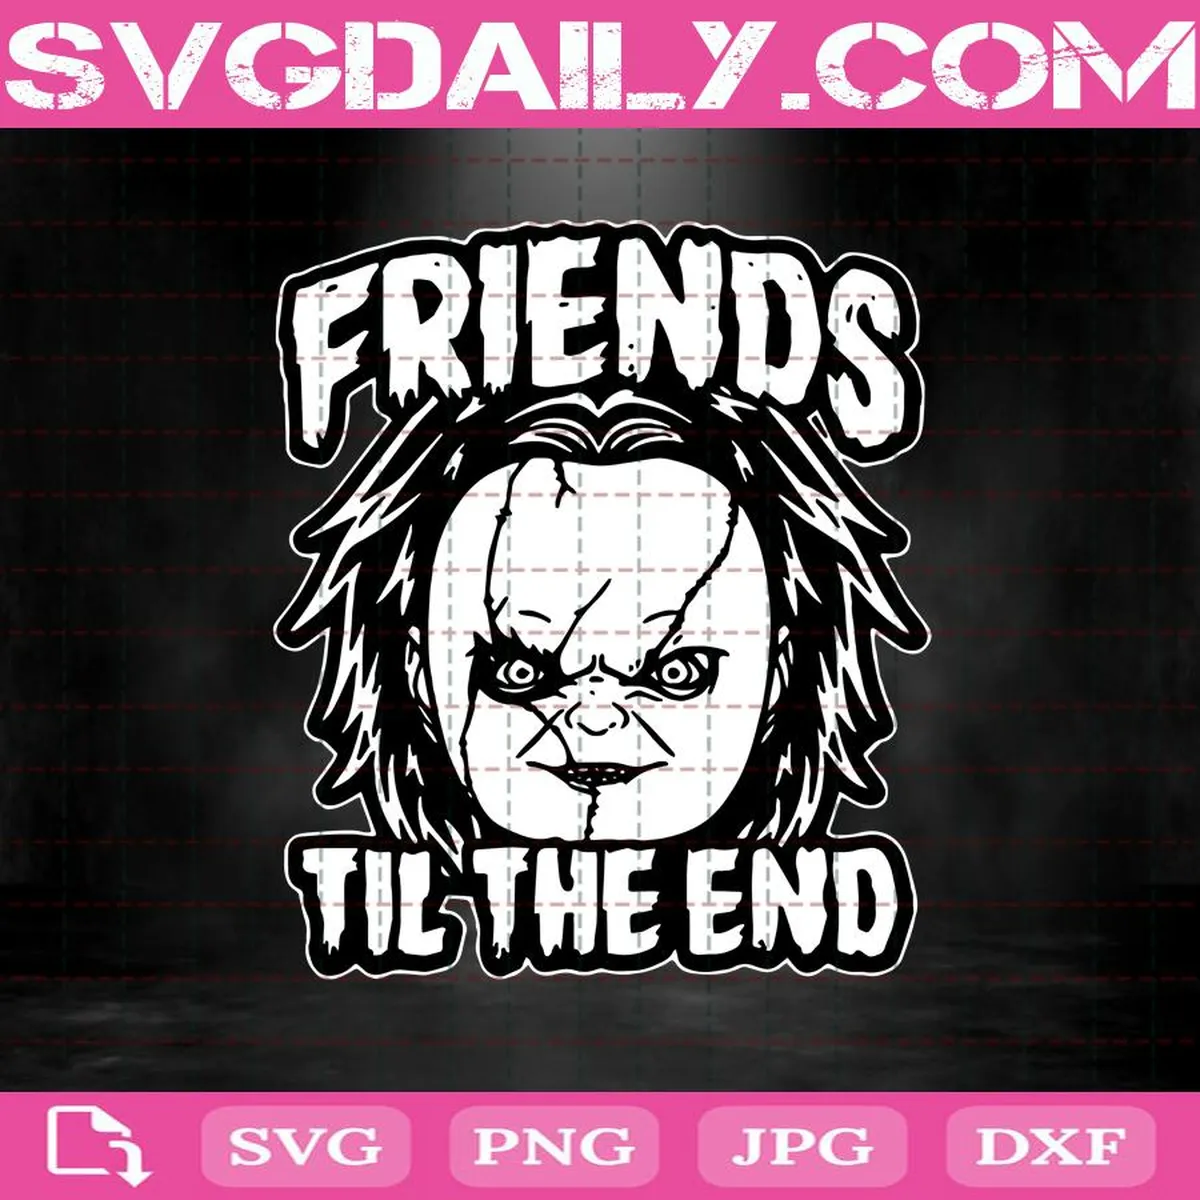 Friends Til The End Childs Play Svg, Chucky Svg, Horror Svg, Halloween Svg, Horror Movie Svg, Child's Play Svg